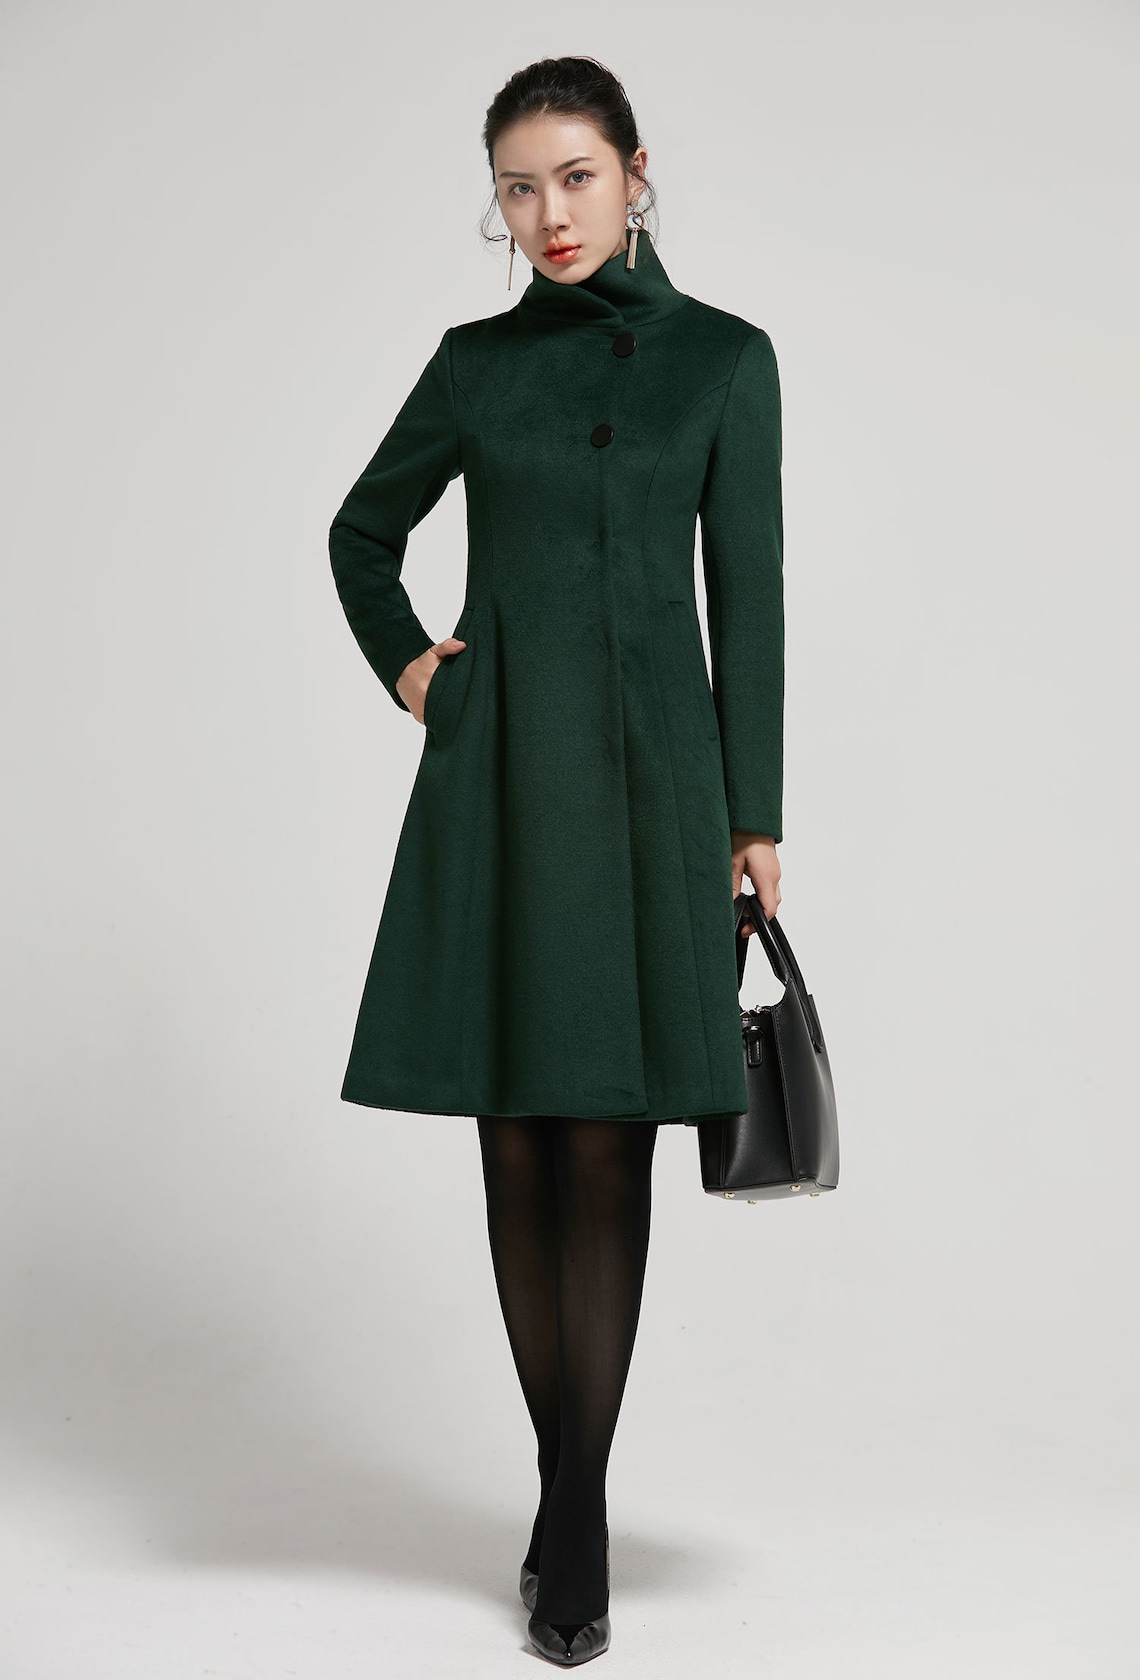 Emerald Green Coat Vintage Inspired Classic Wool Coat Winter - Etsy ...